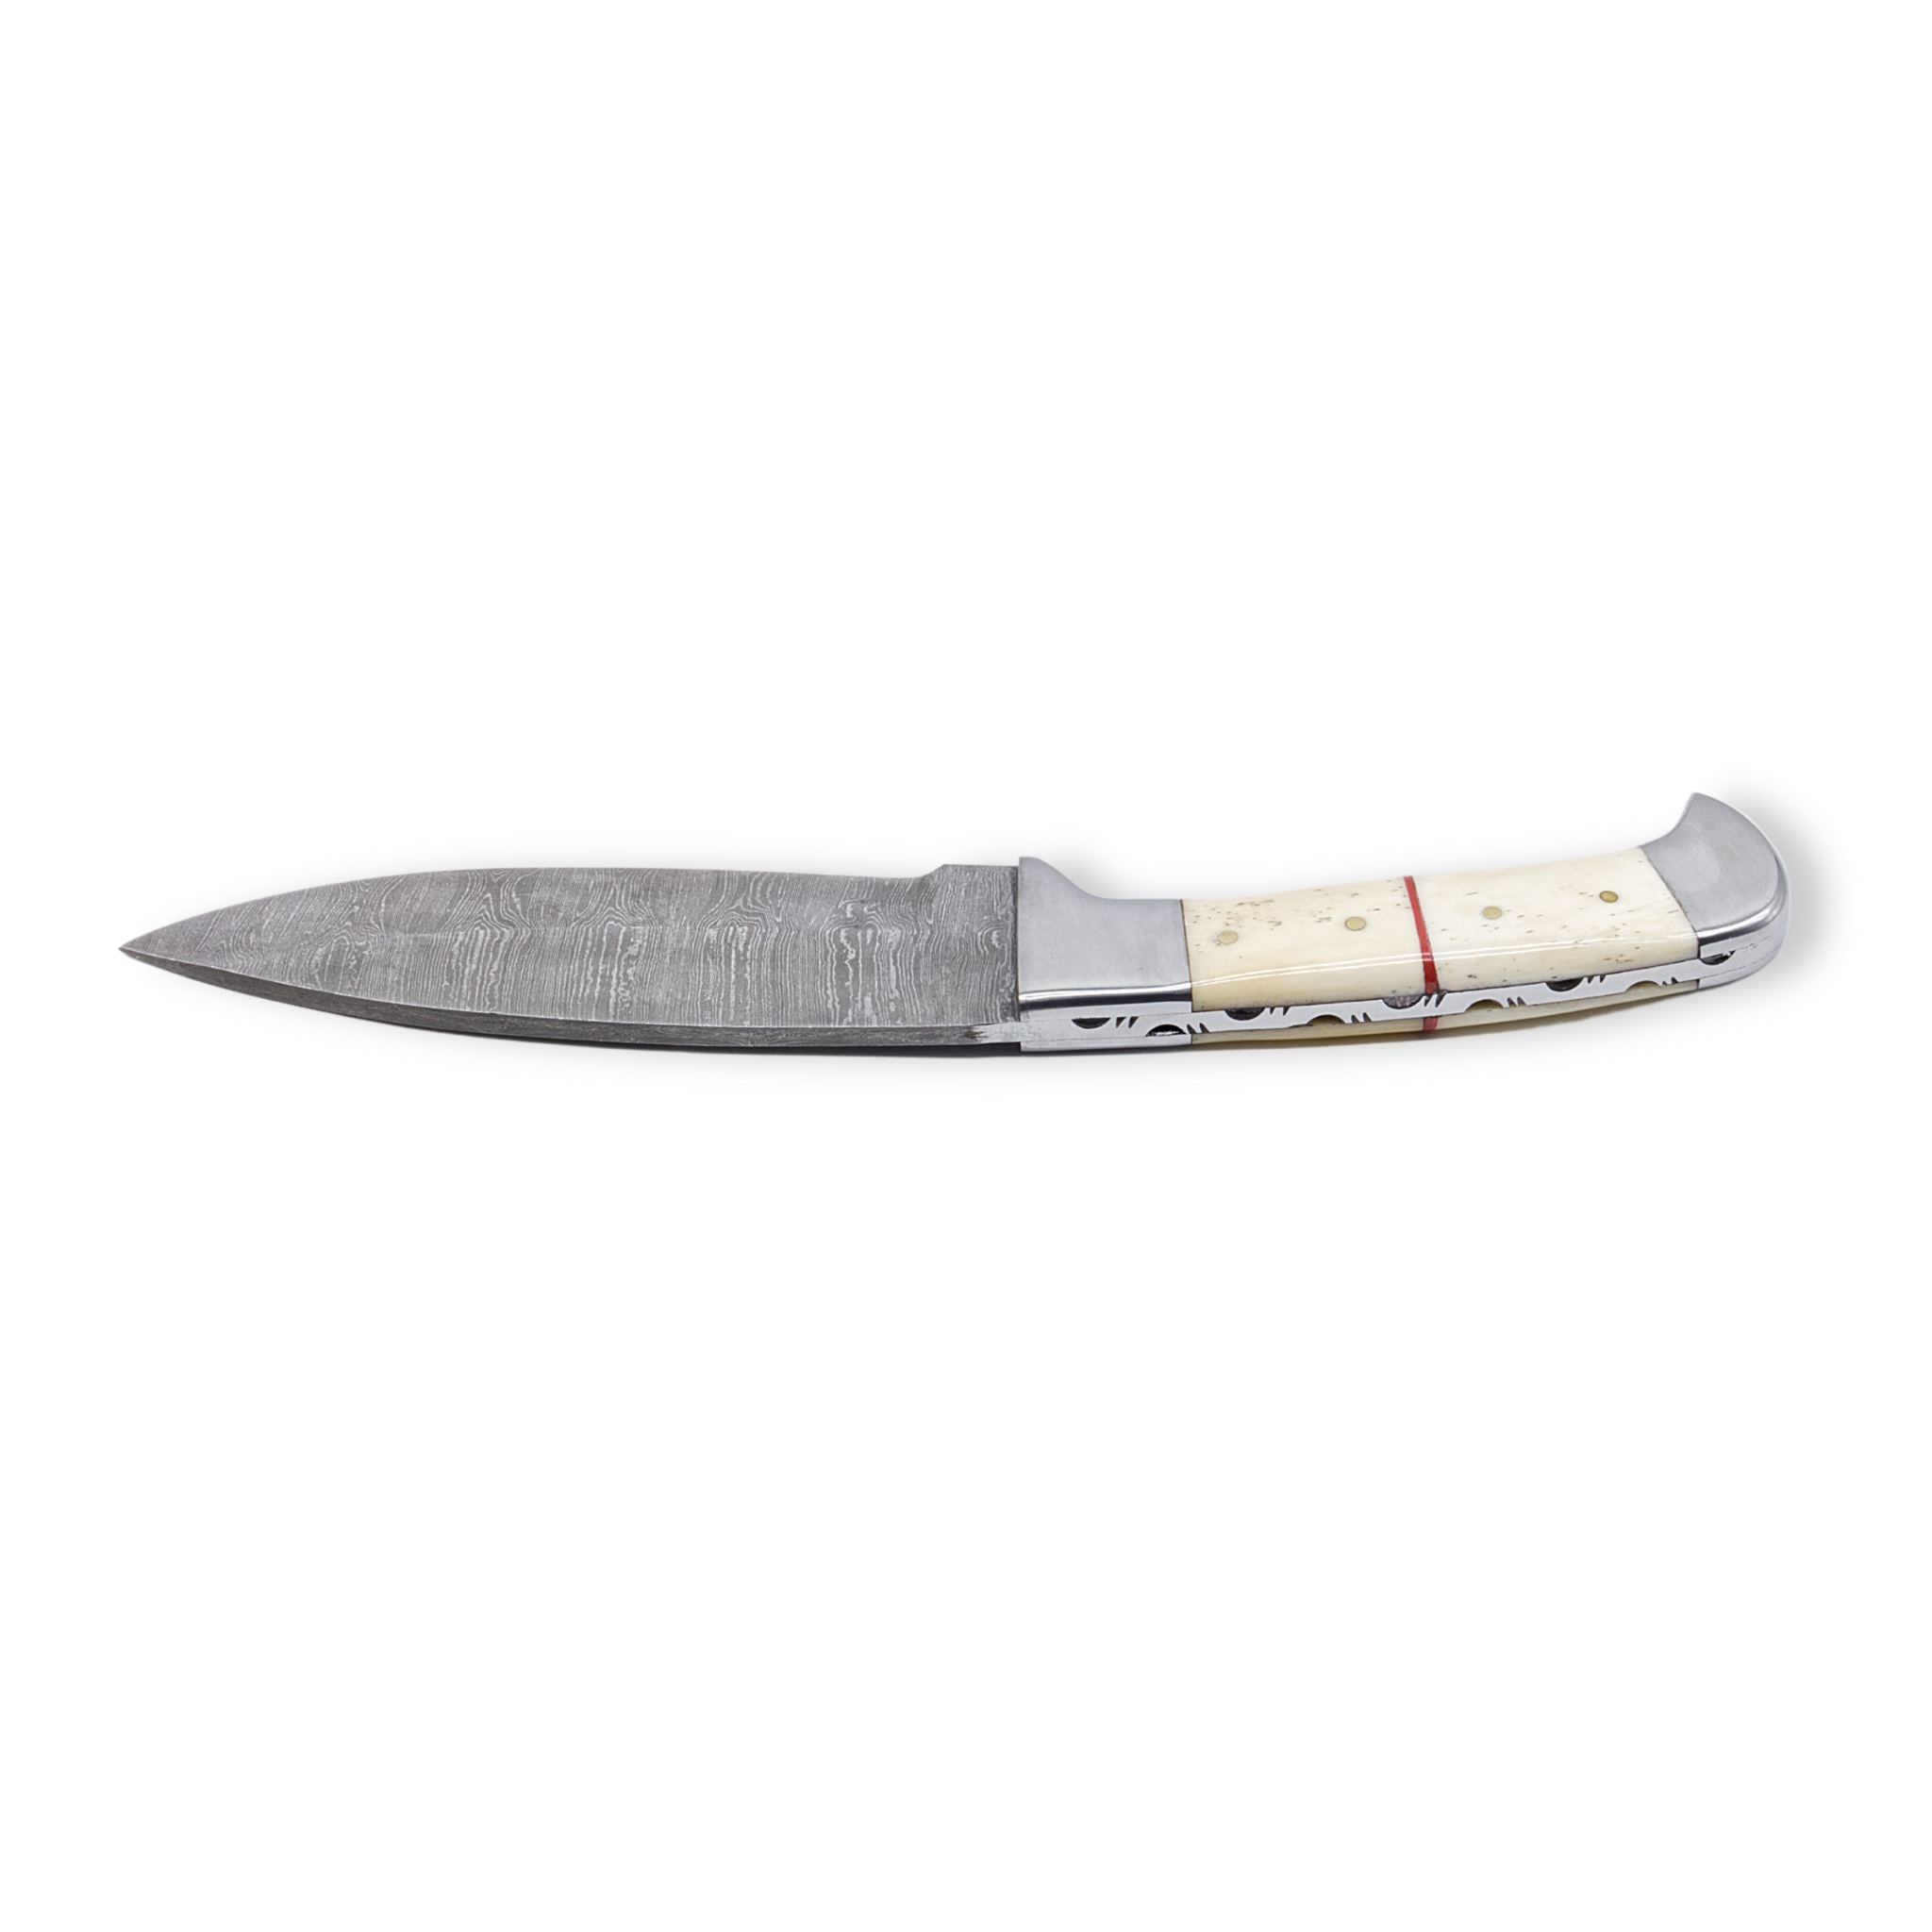 Outback Edge I, Damascus Steel, Handmade Hunting Knife